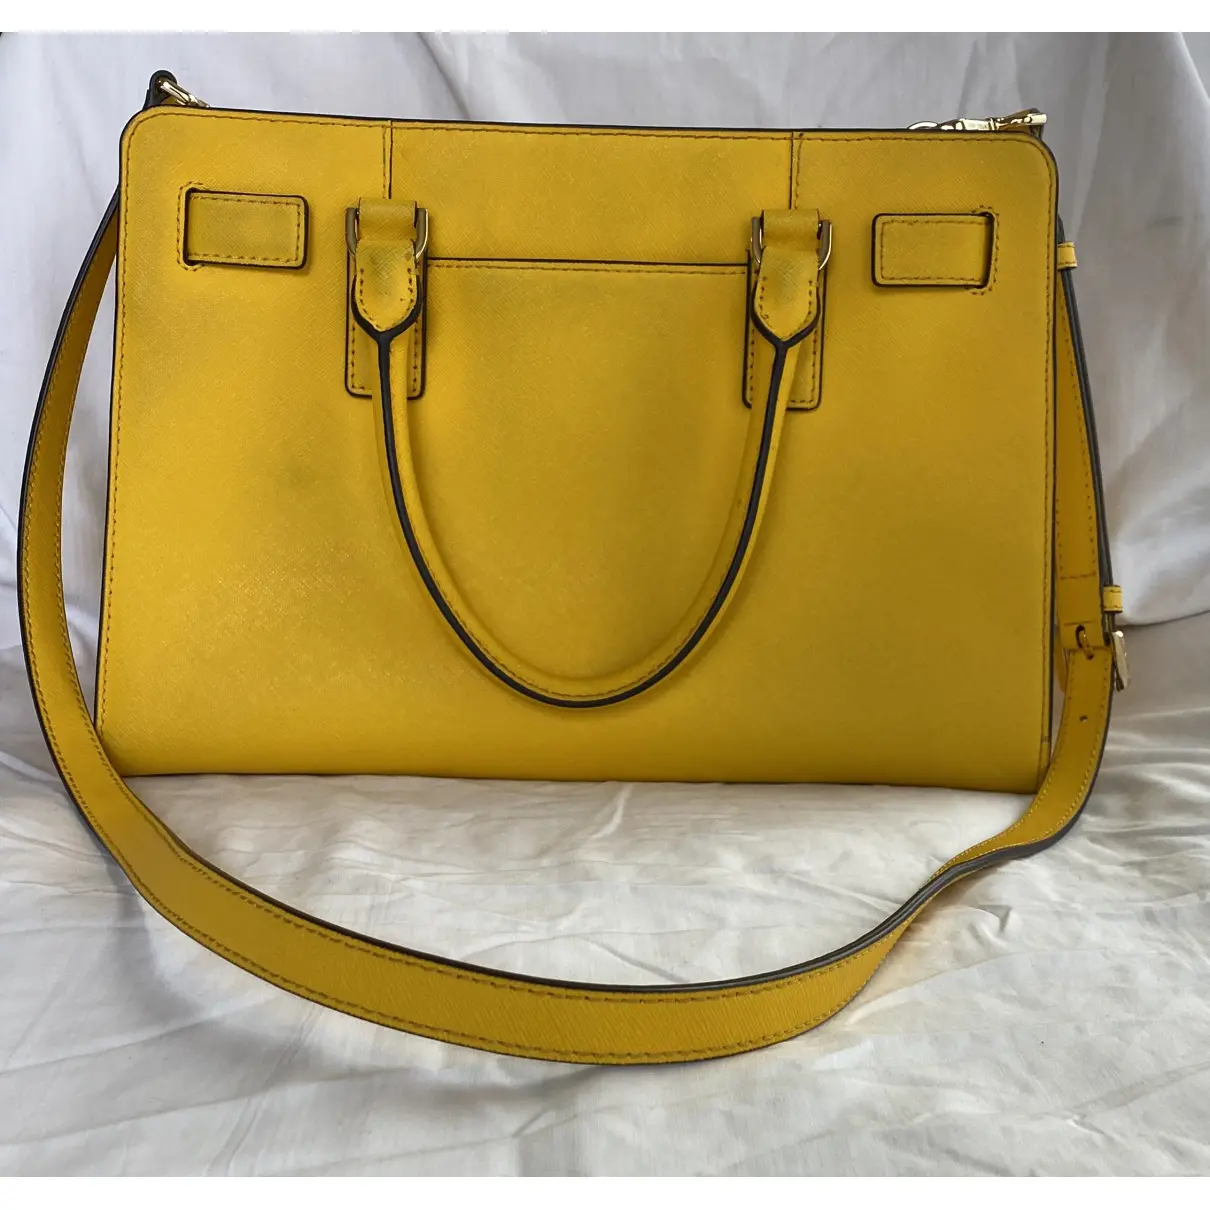 Buy Michael Kors Dillon leather satchel online